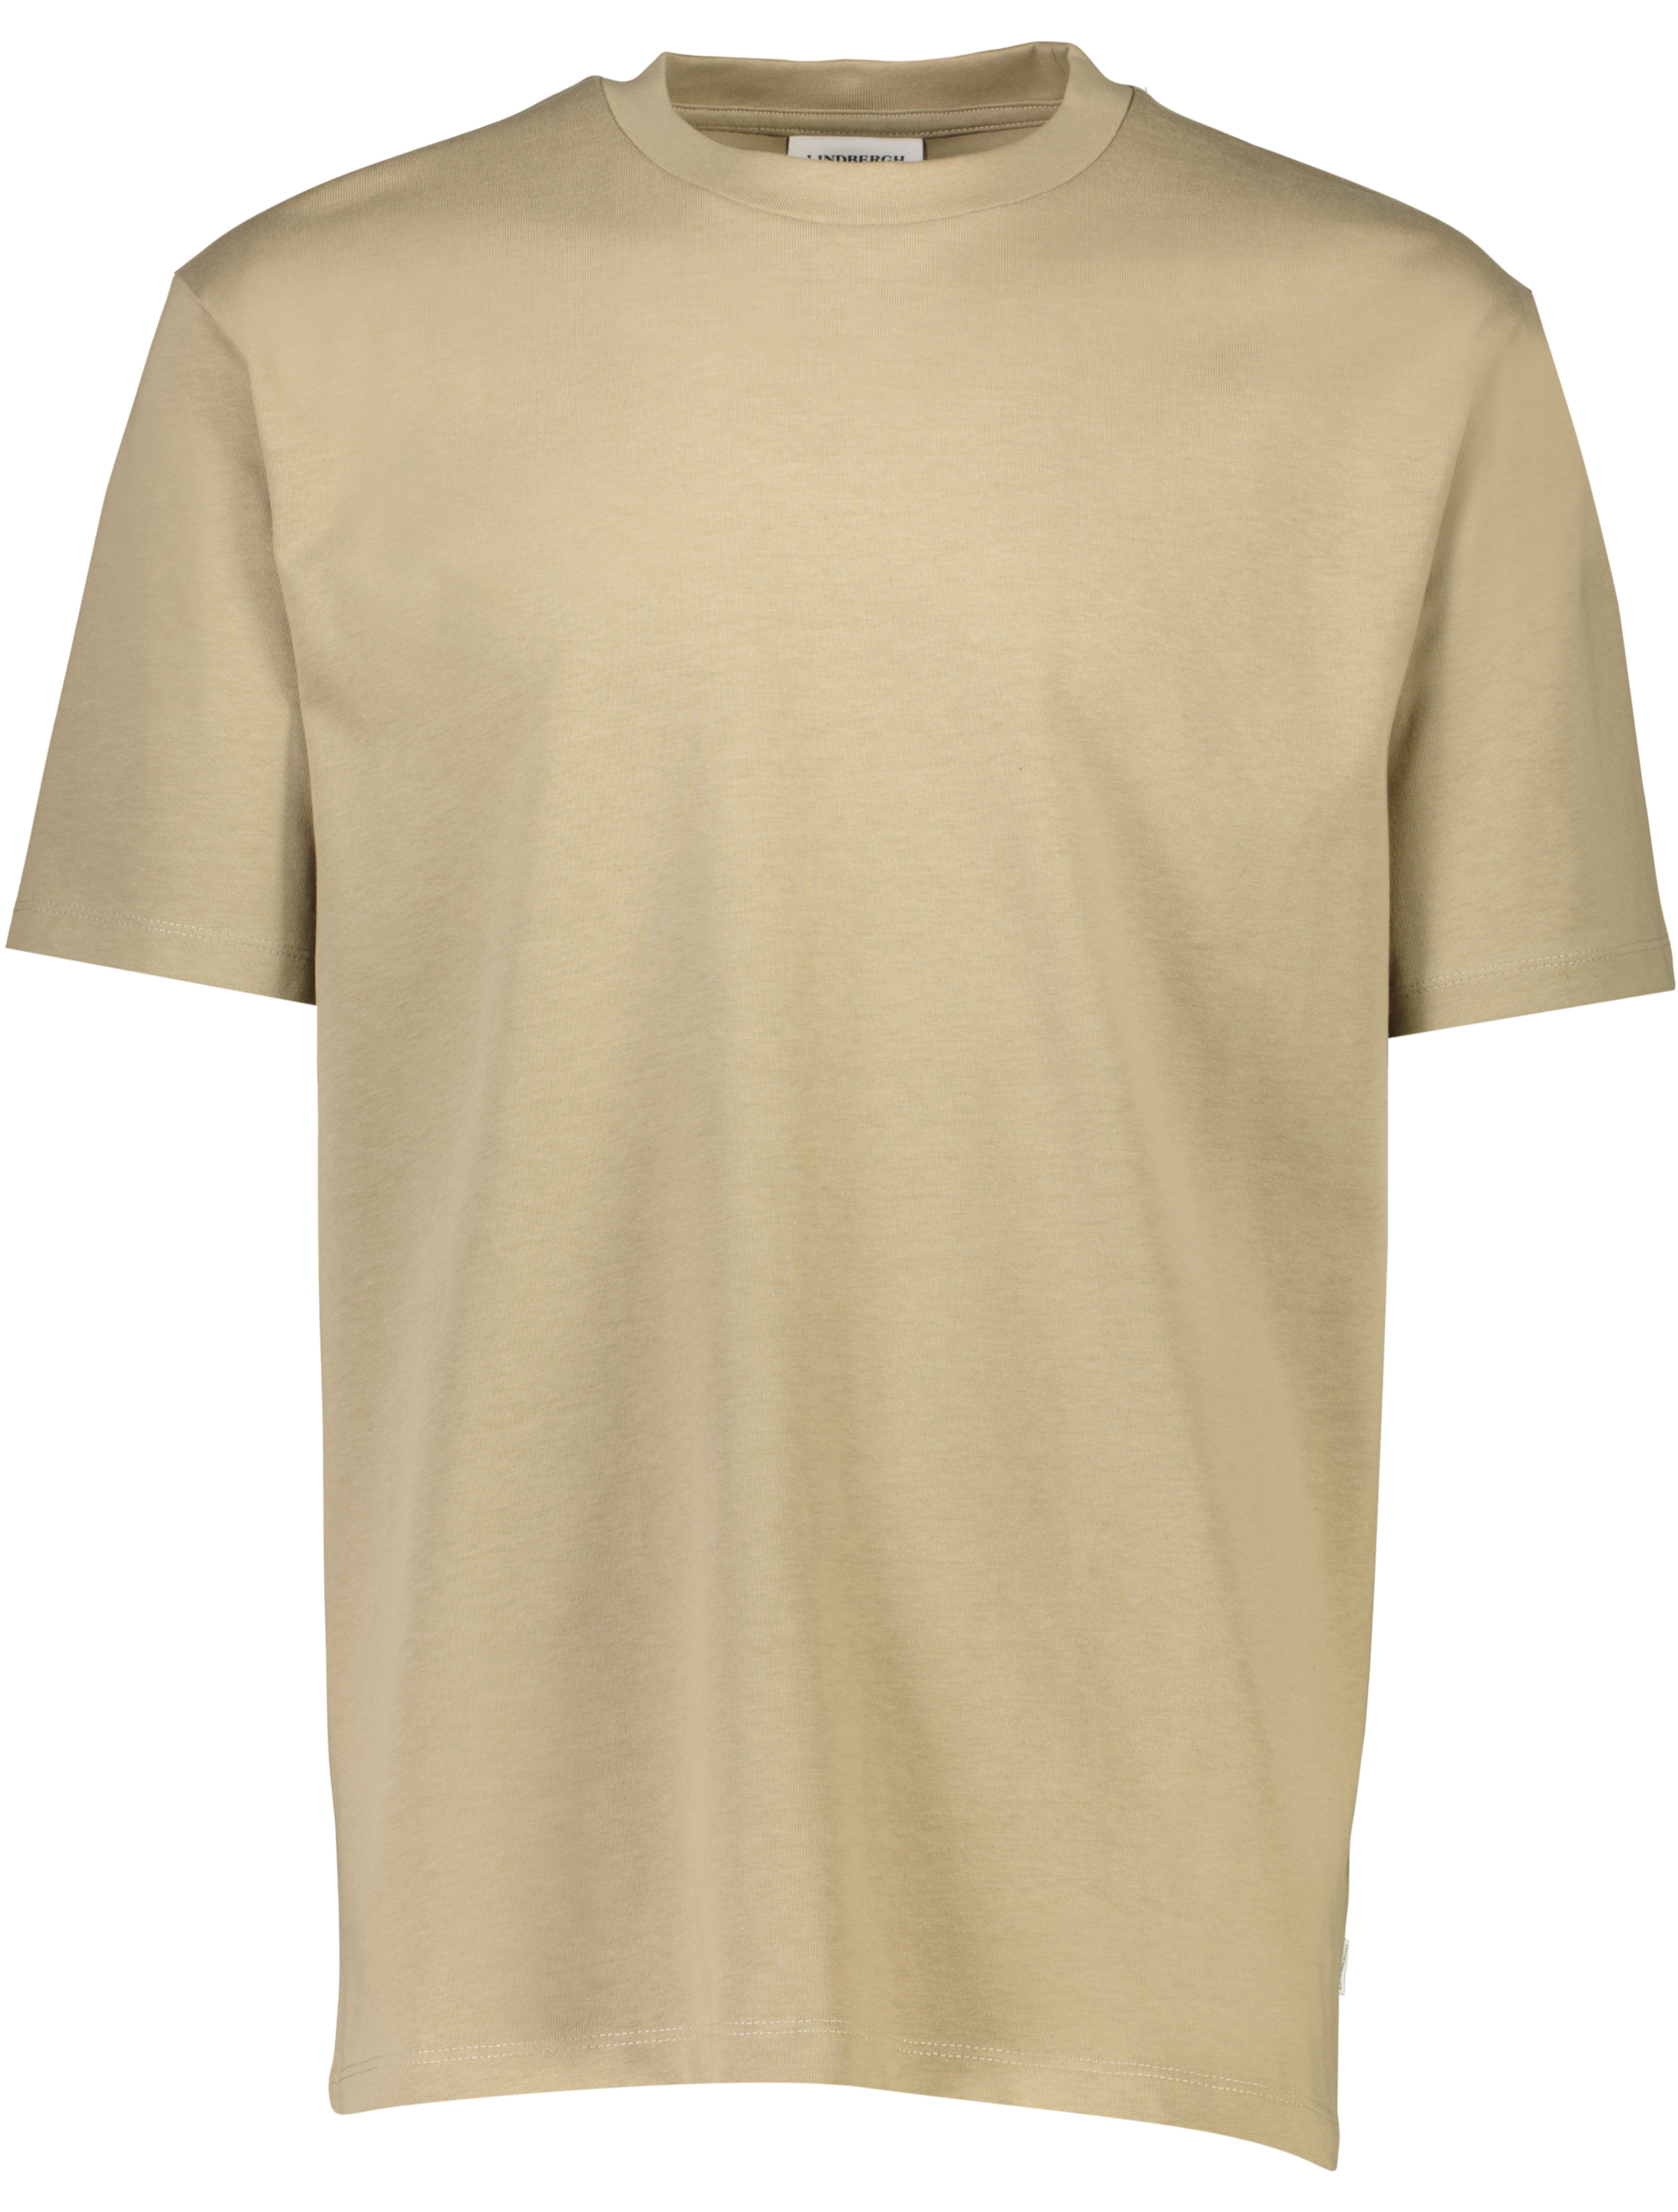 Lindbergh T-shirt grijs / lt stone